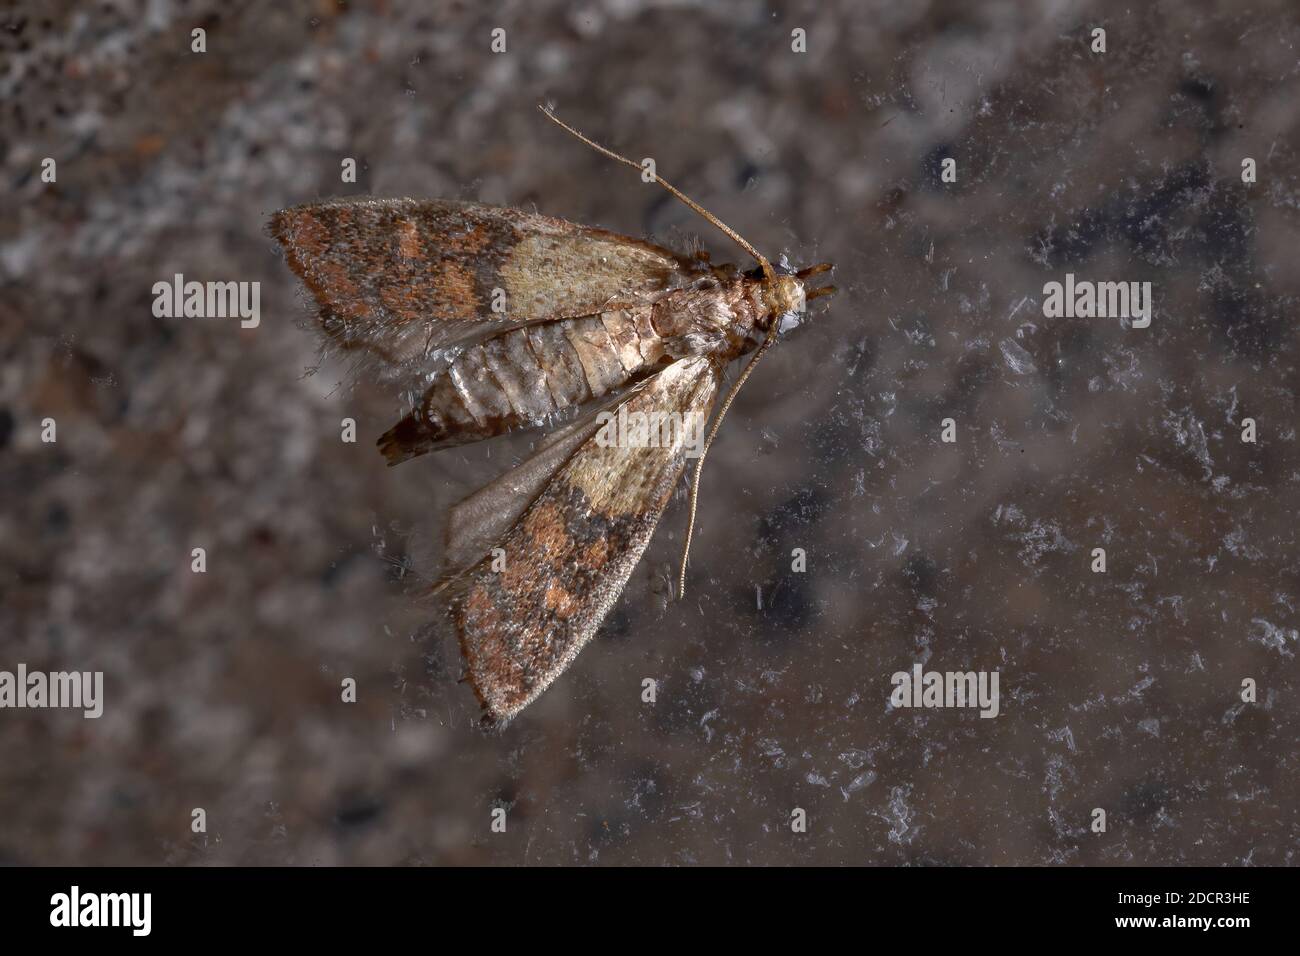 Indian Meal Moth of the species Plodia interpunctella Stock Photo - Alamy